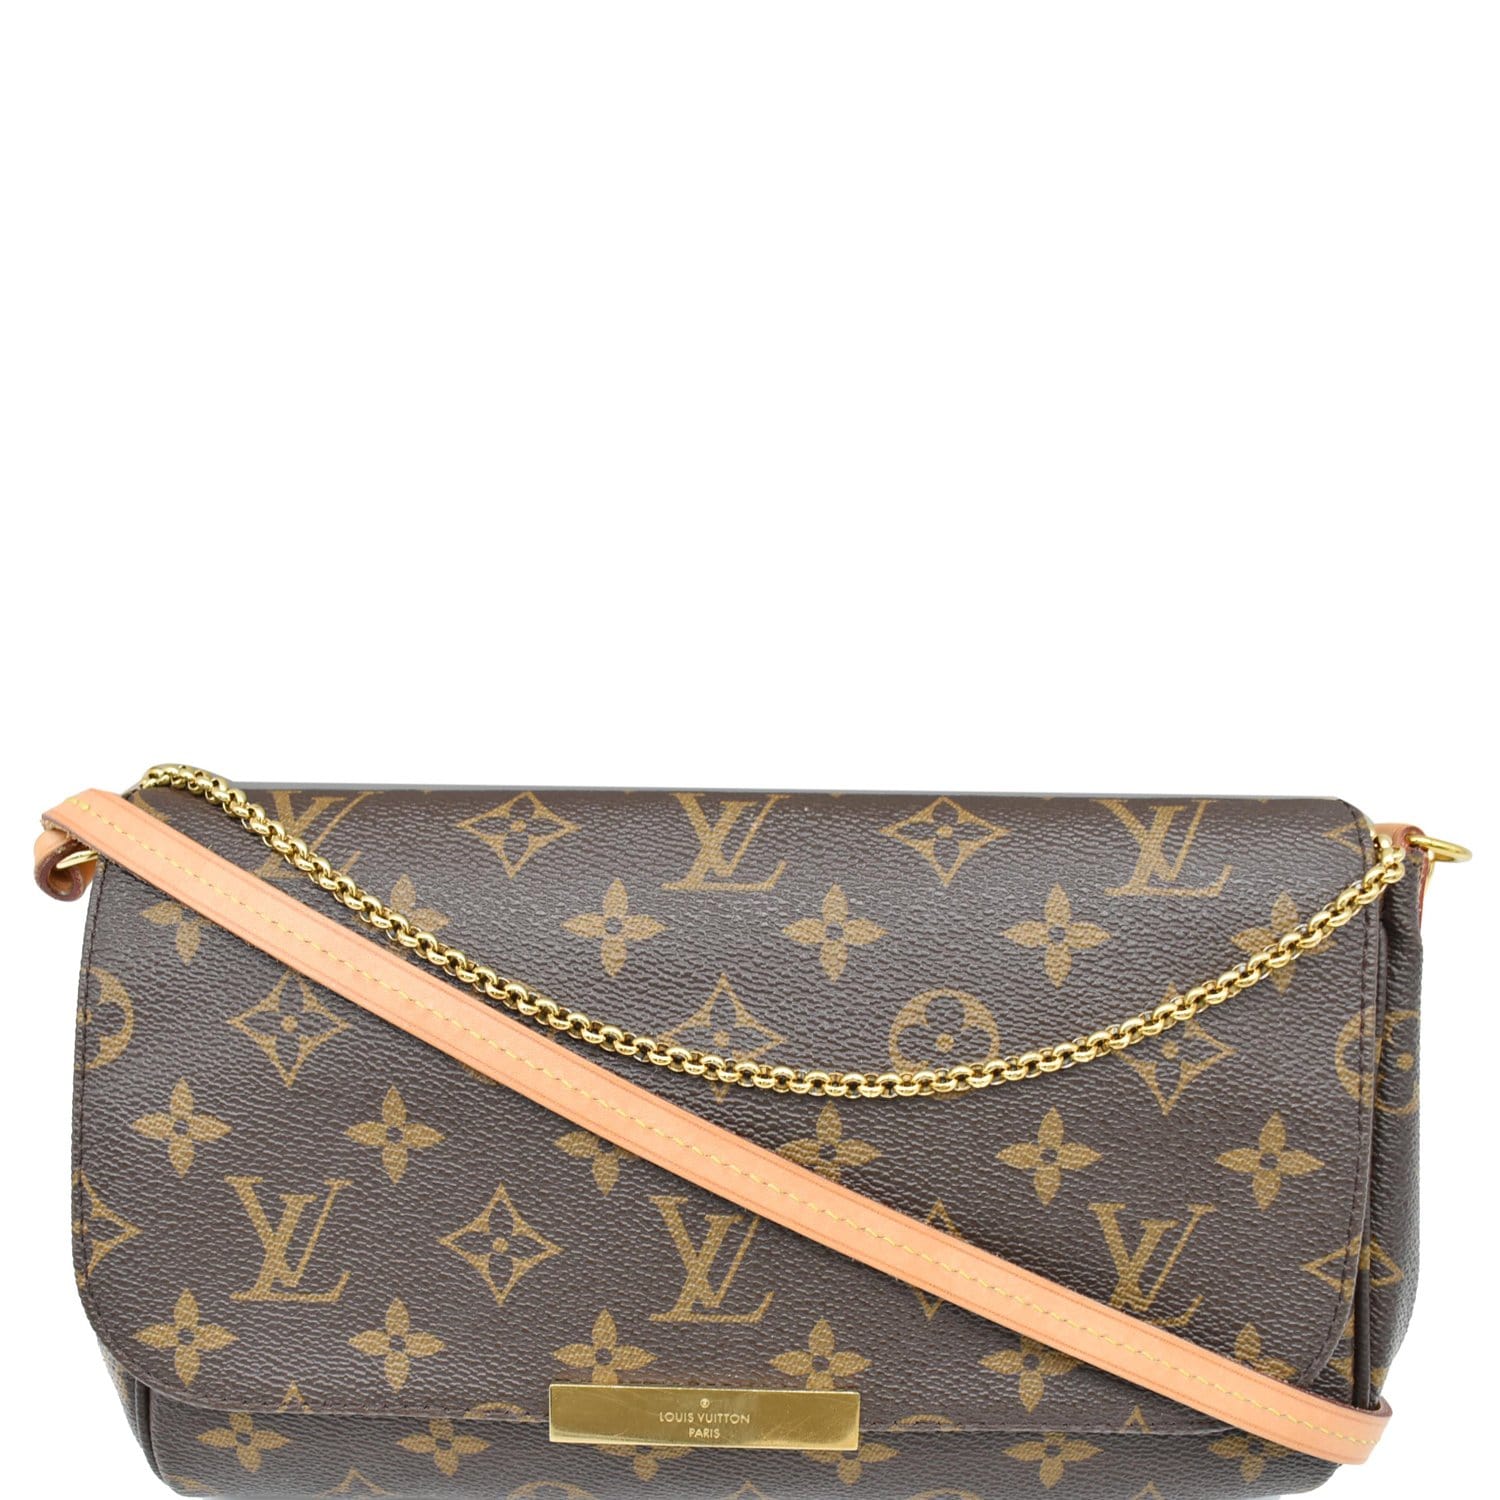 Louis Vuitton Favorite Mm Cross body bag